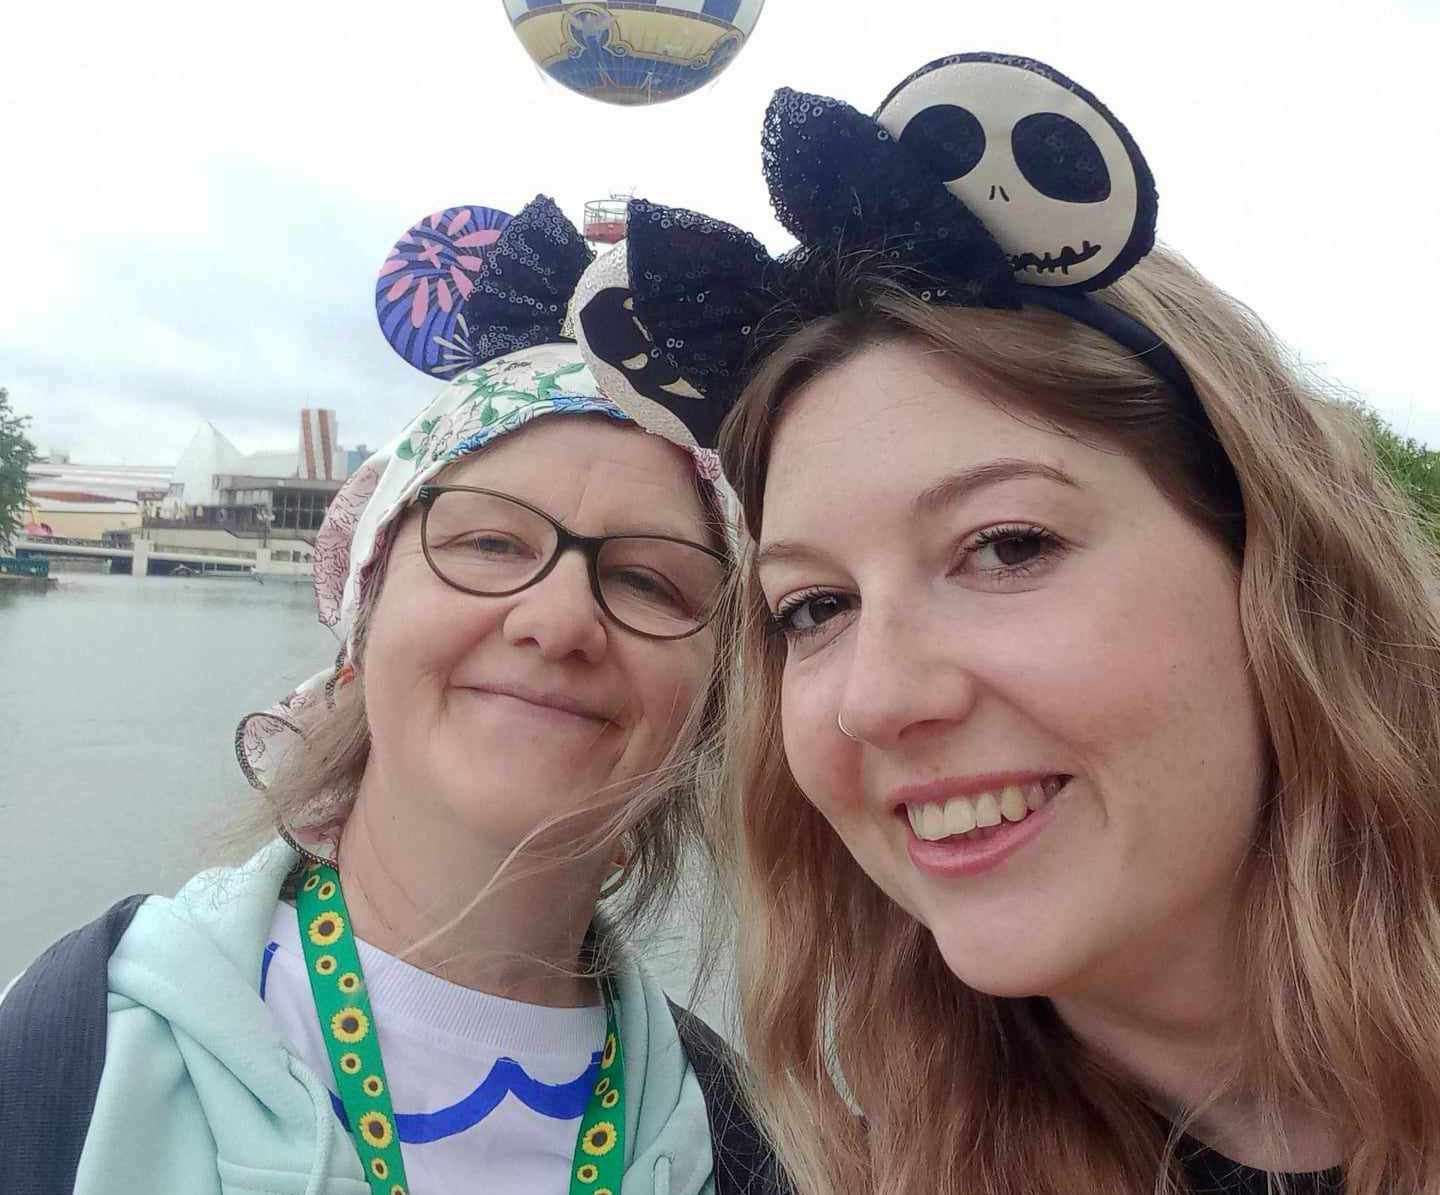 Bronwen and Fiona on a recent trip to Disneyland Paris